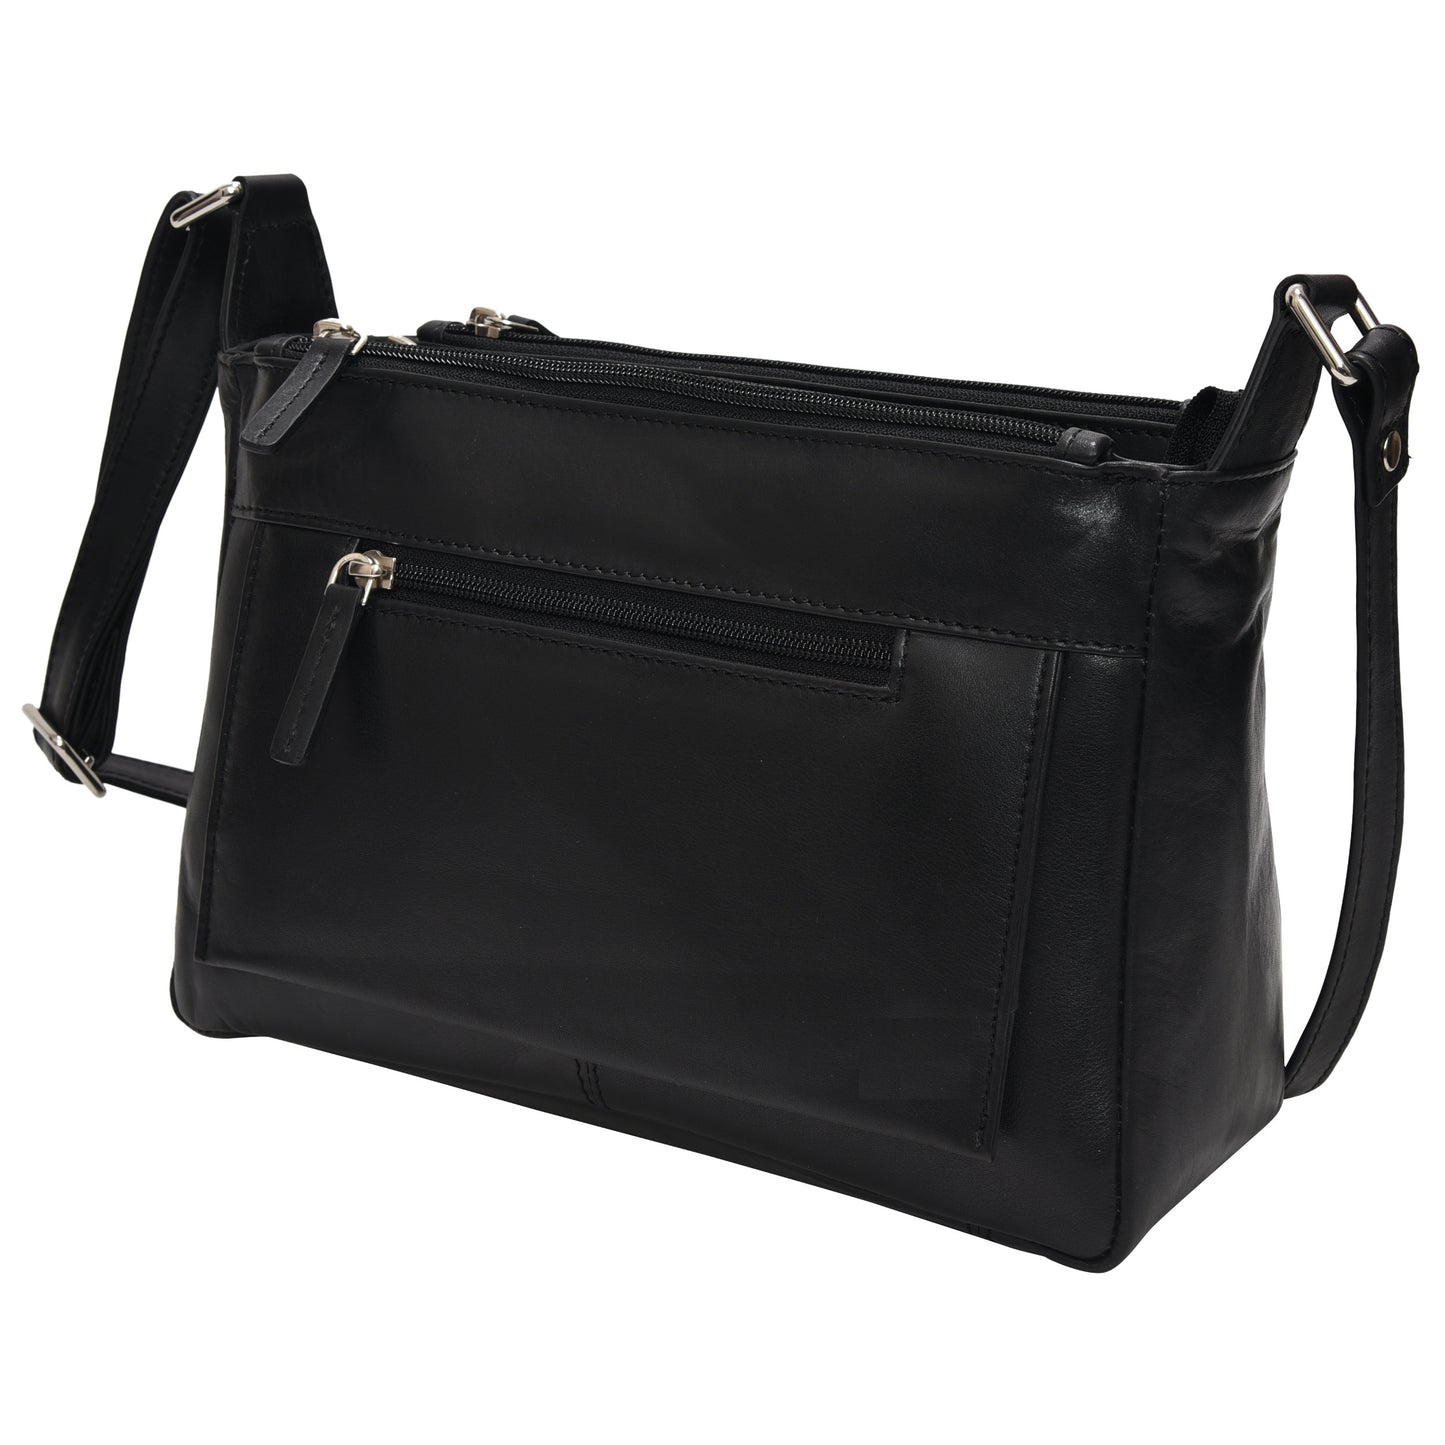 GT-H73: G&T Full-grain Leather Classic Multi-zip Handbag with Long Adjustable Strap